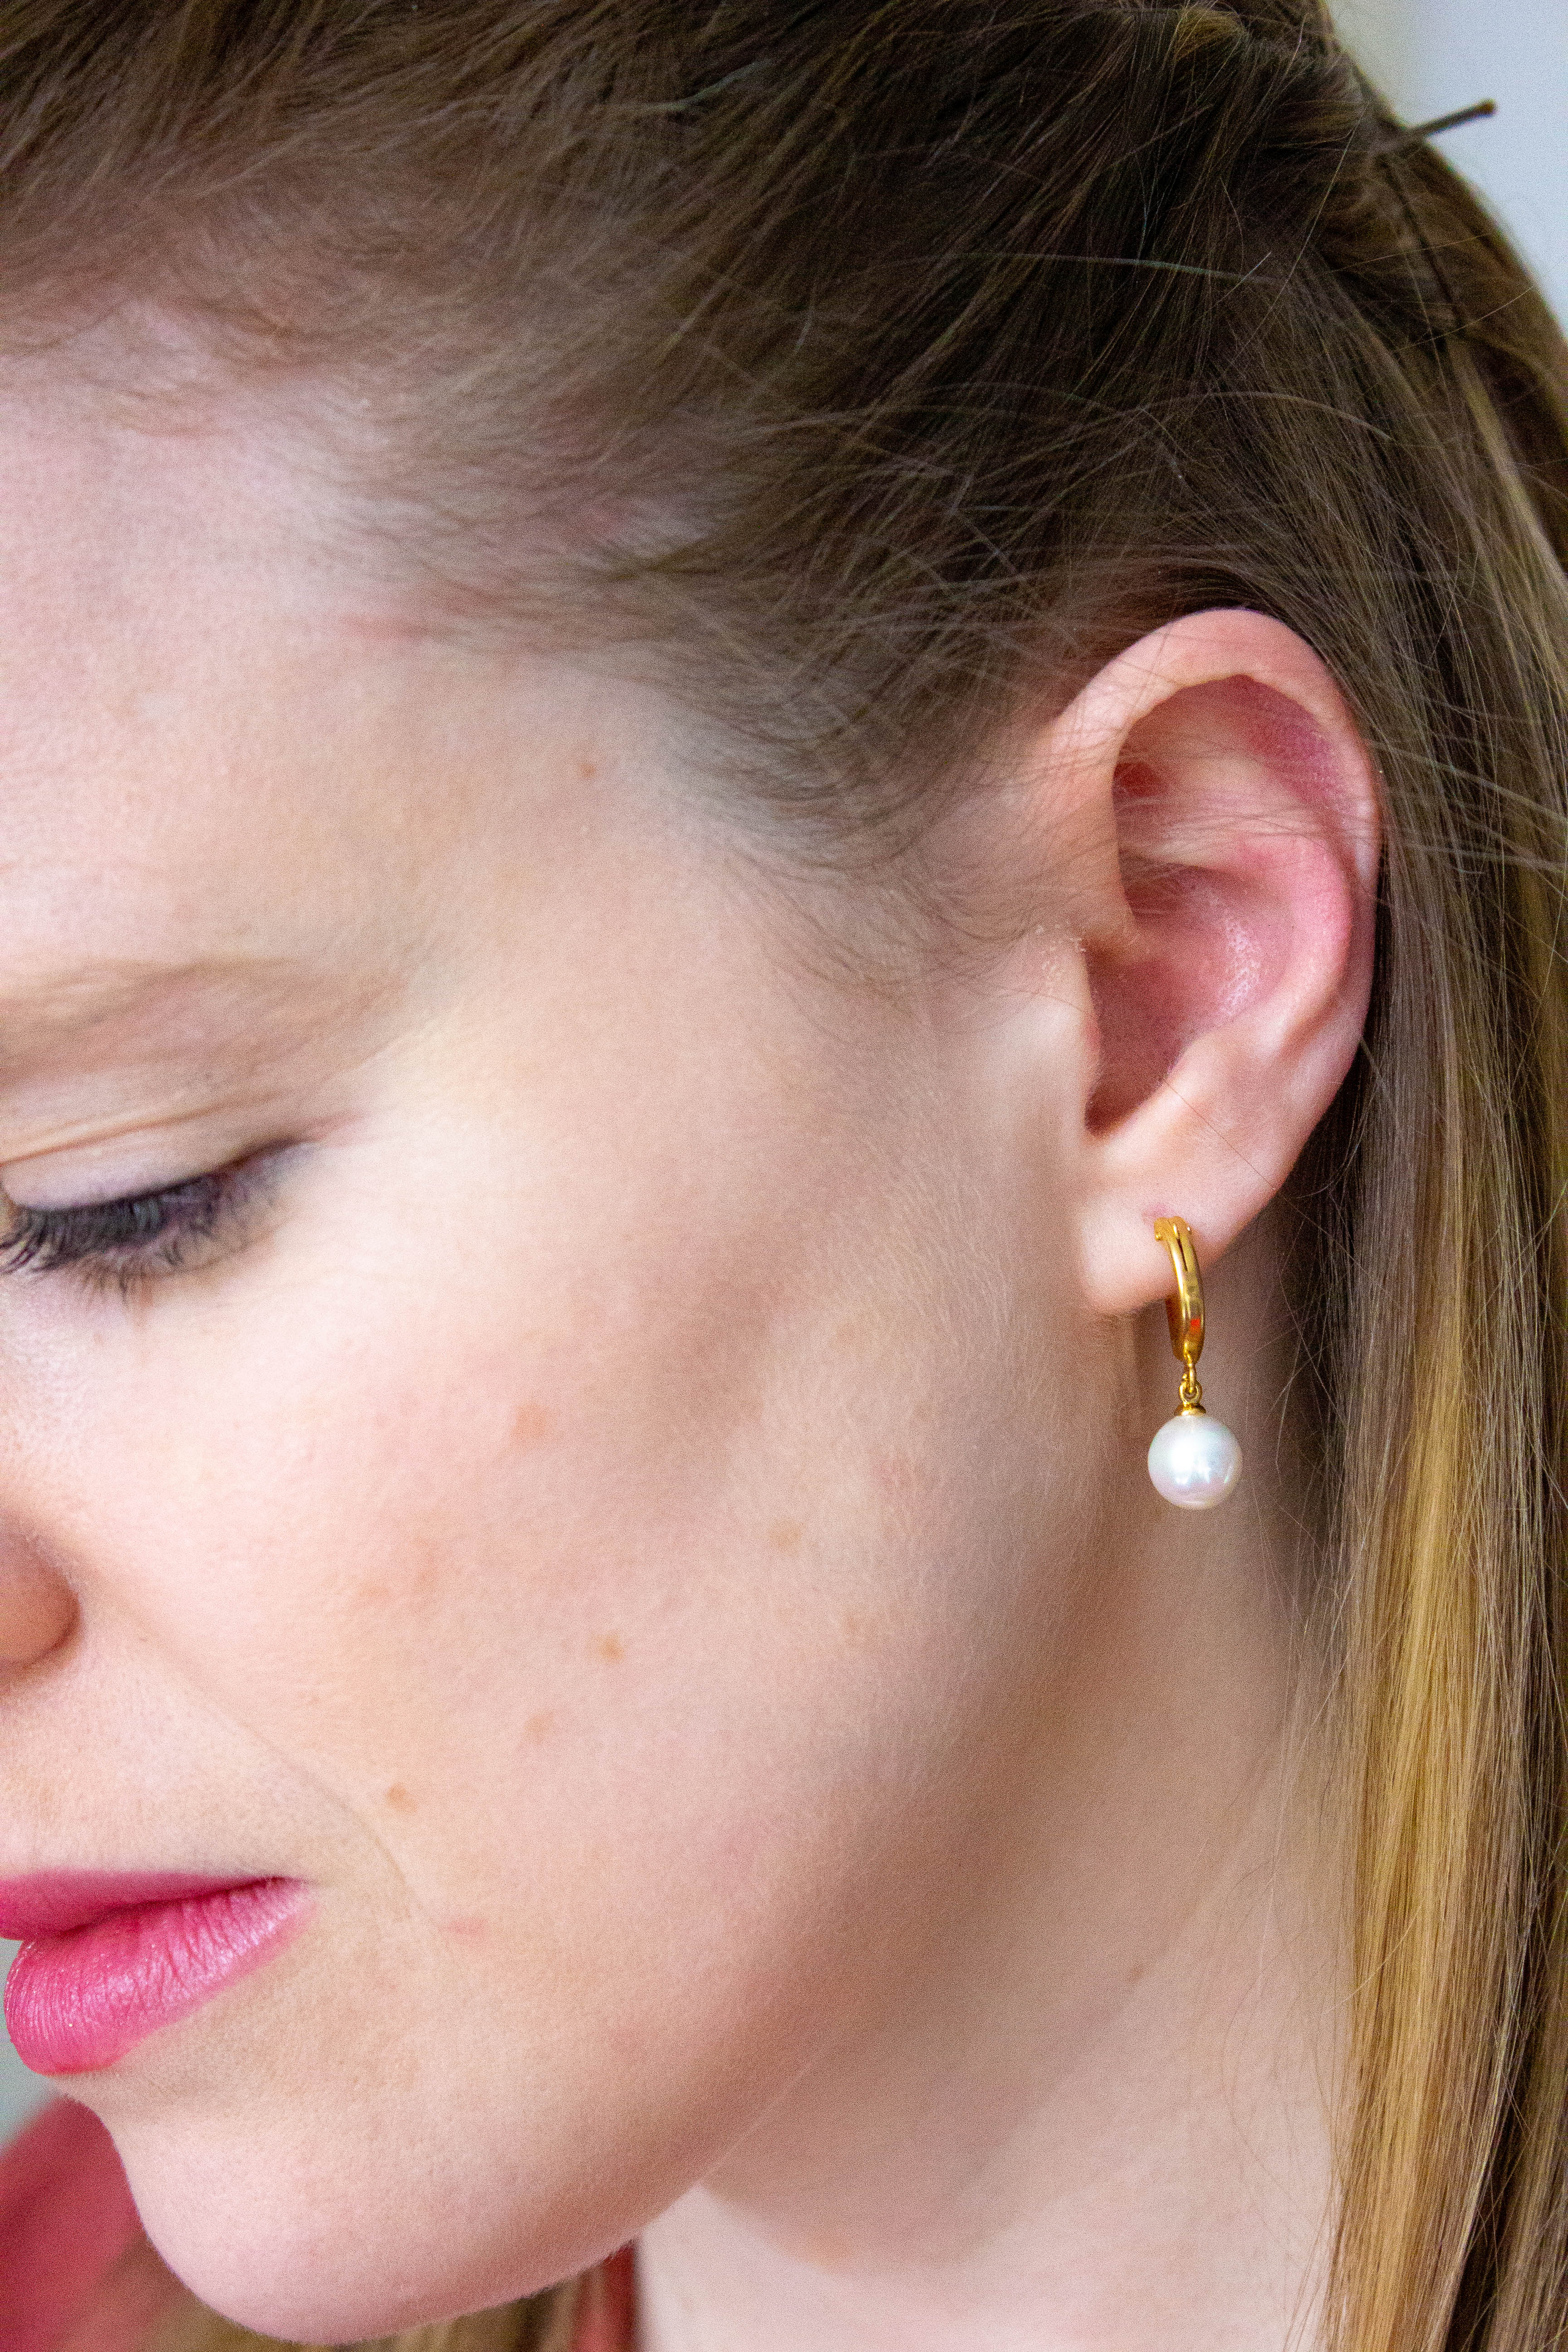 Rellery Jewelry earrings review